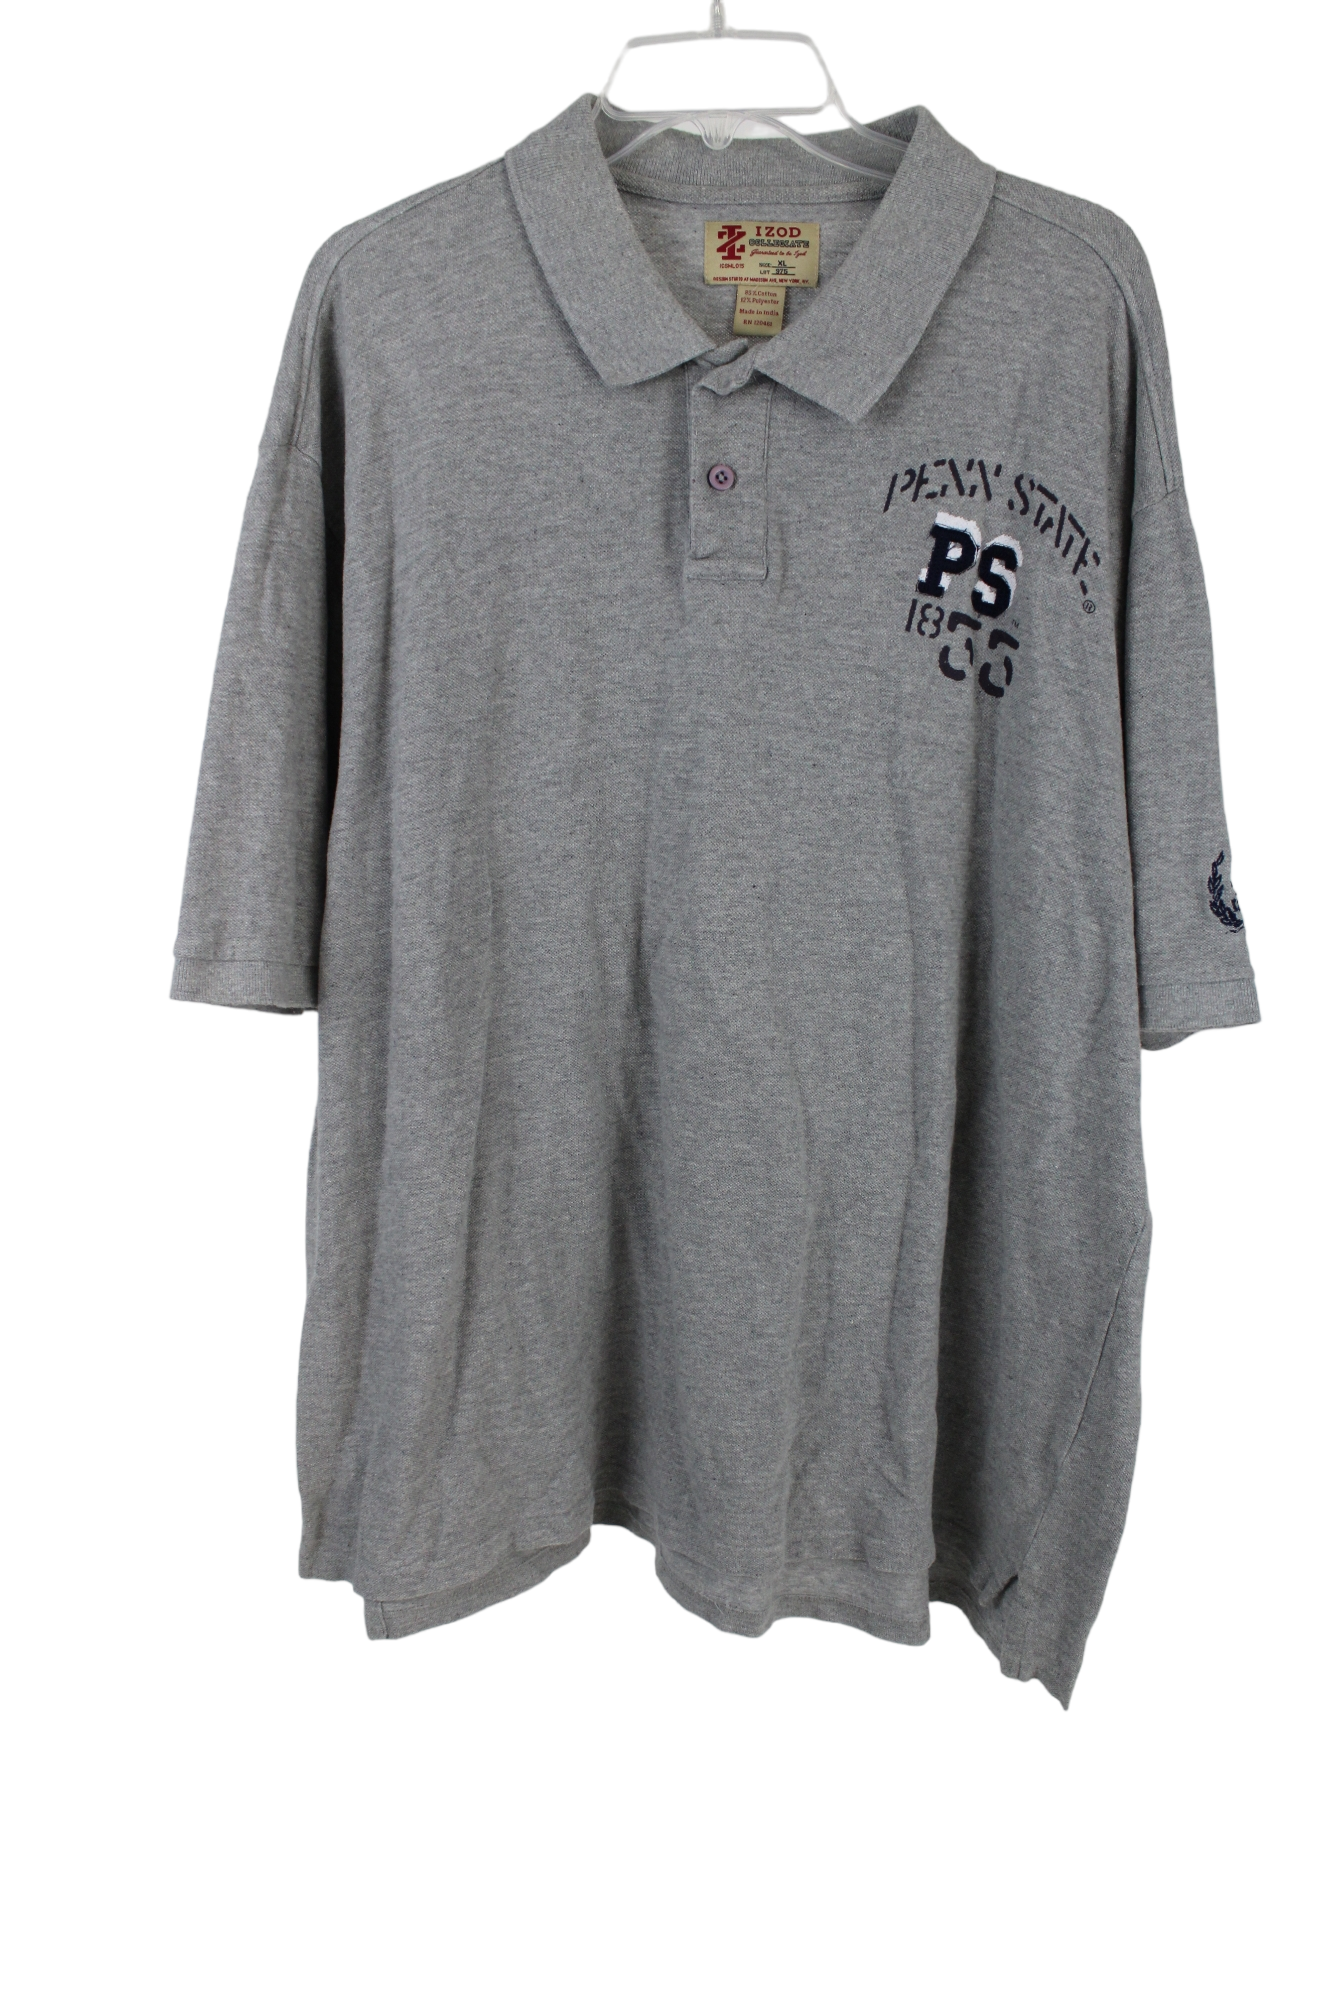 Izod Collegiate Gray Polo Shirt | XL